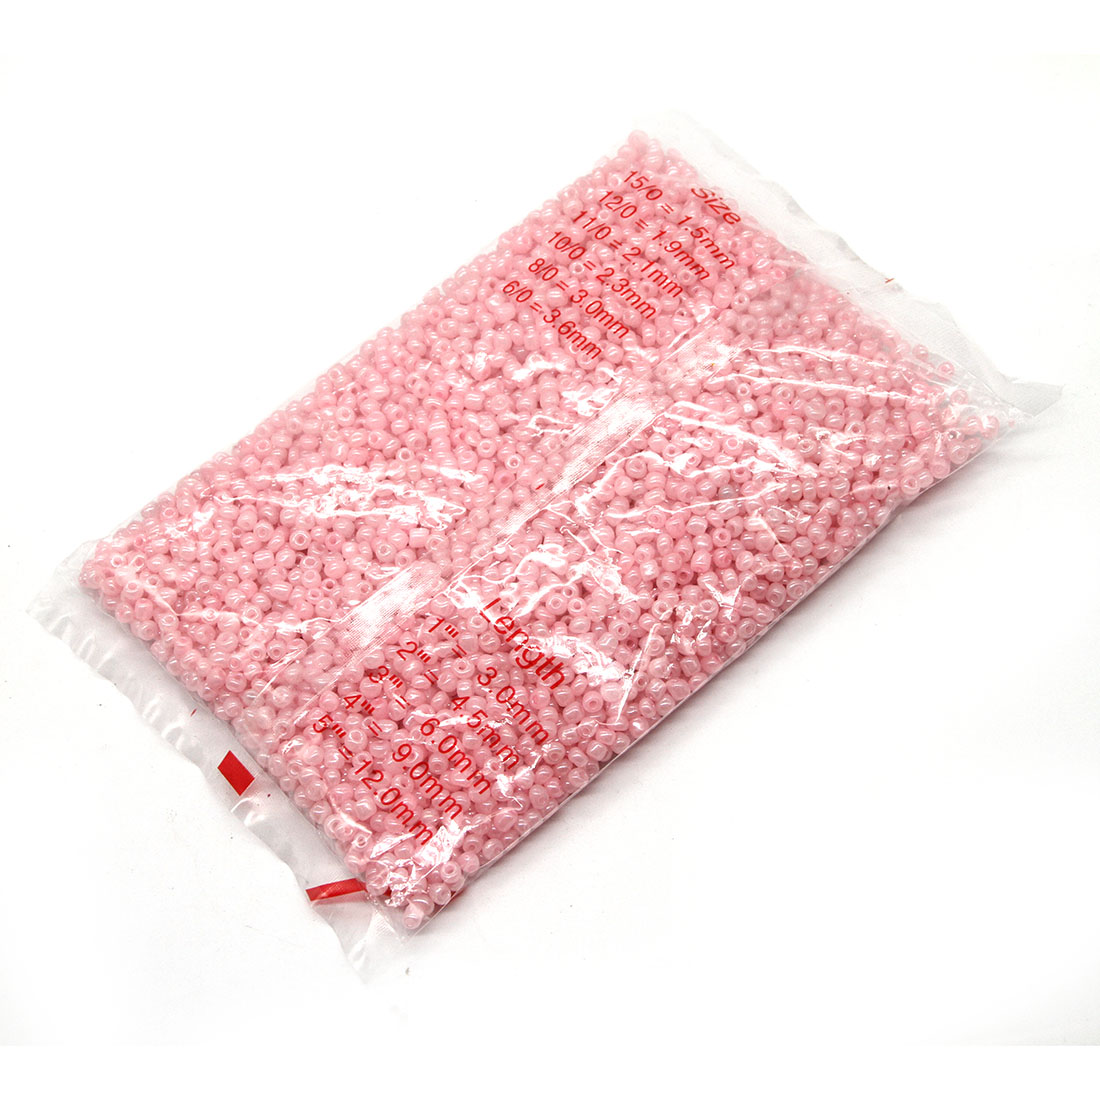 Korean powder 3mm 10,000 packs